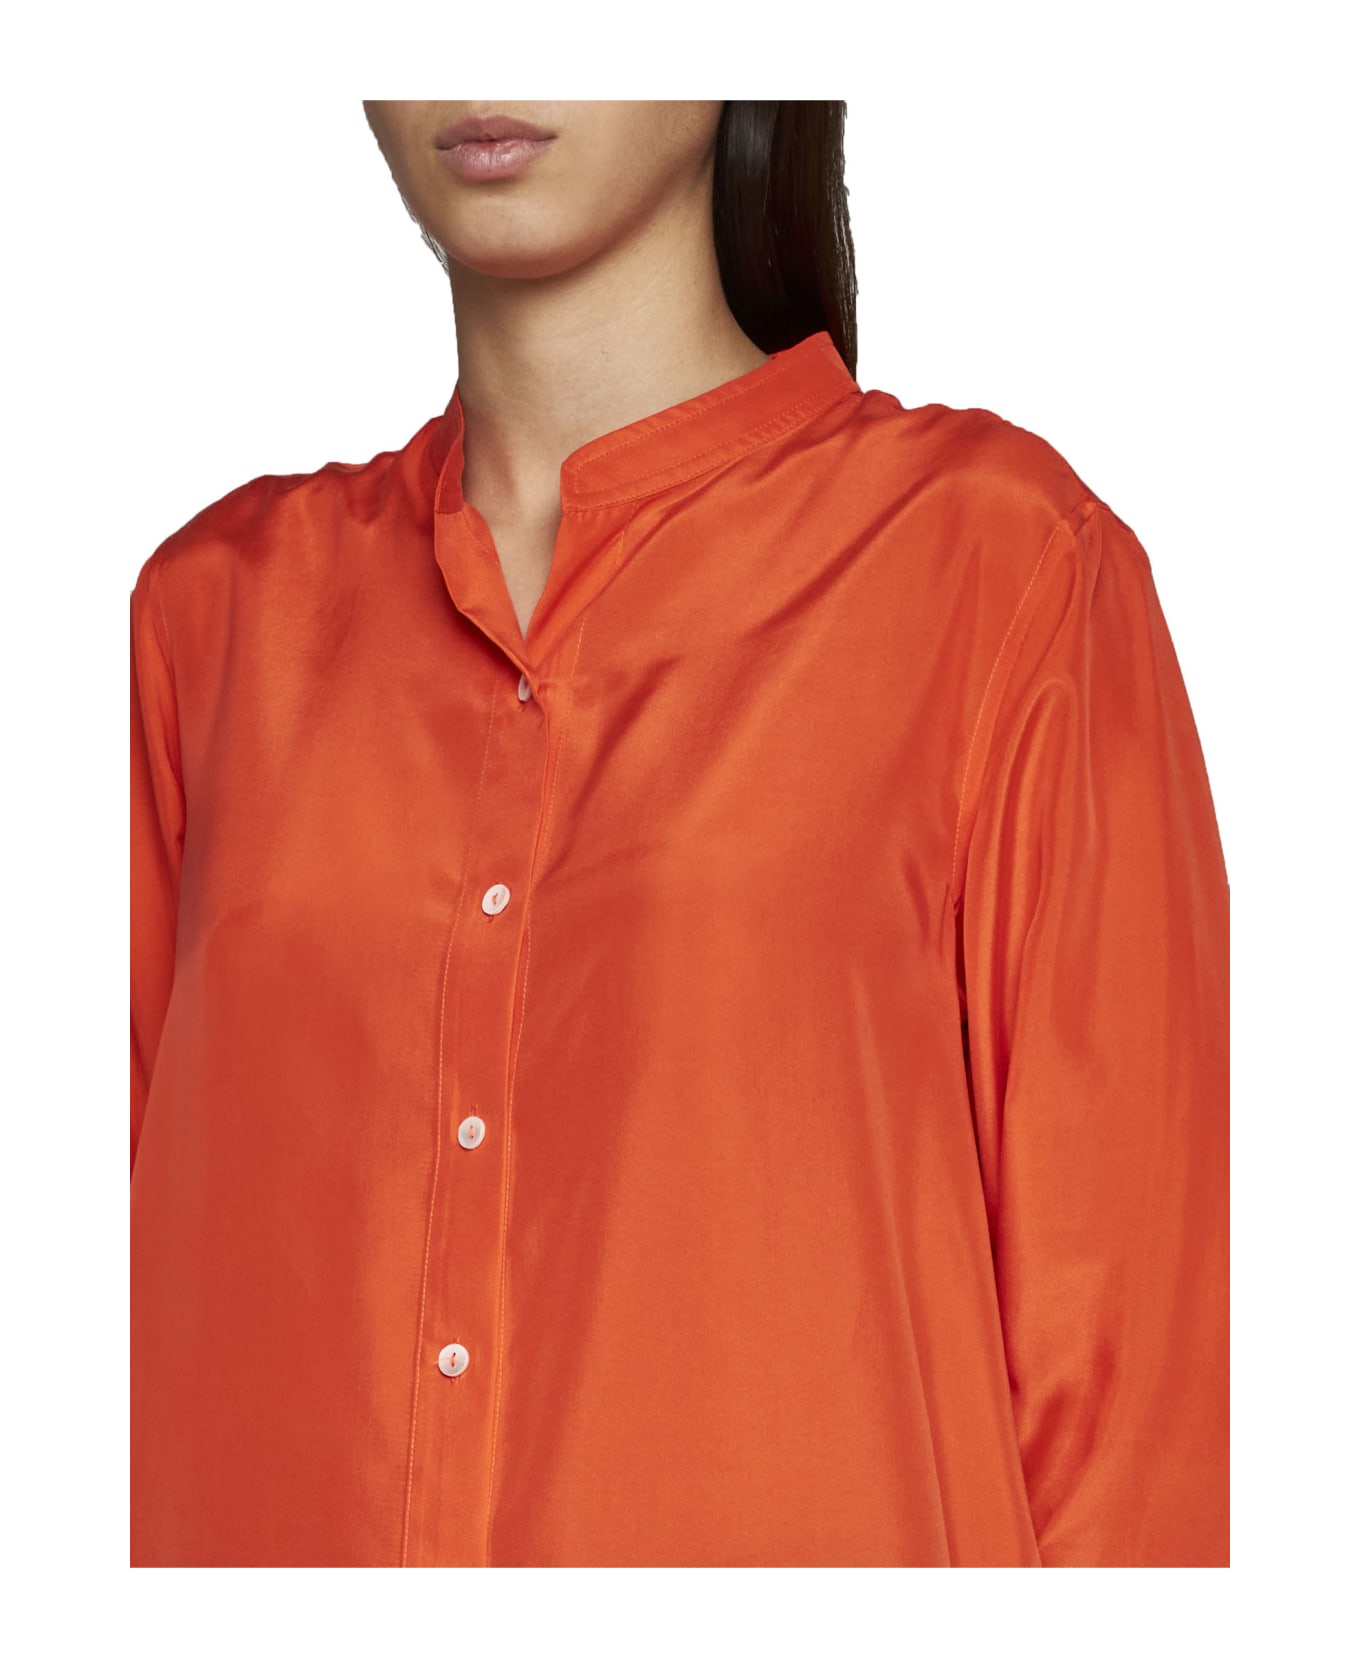 Parosh Dress - Orange